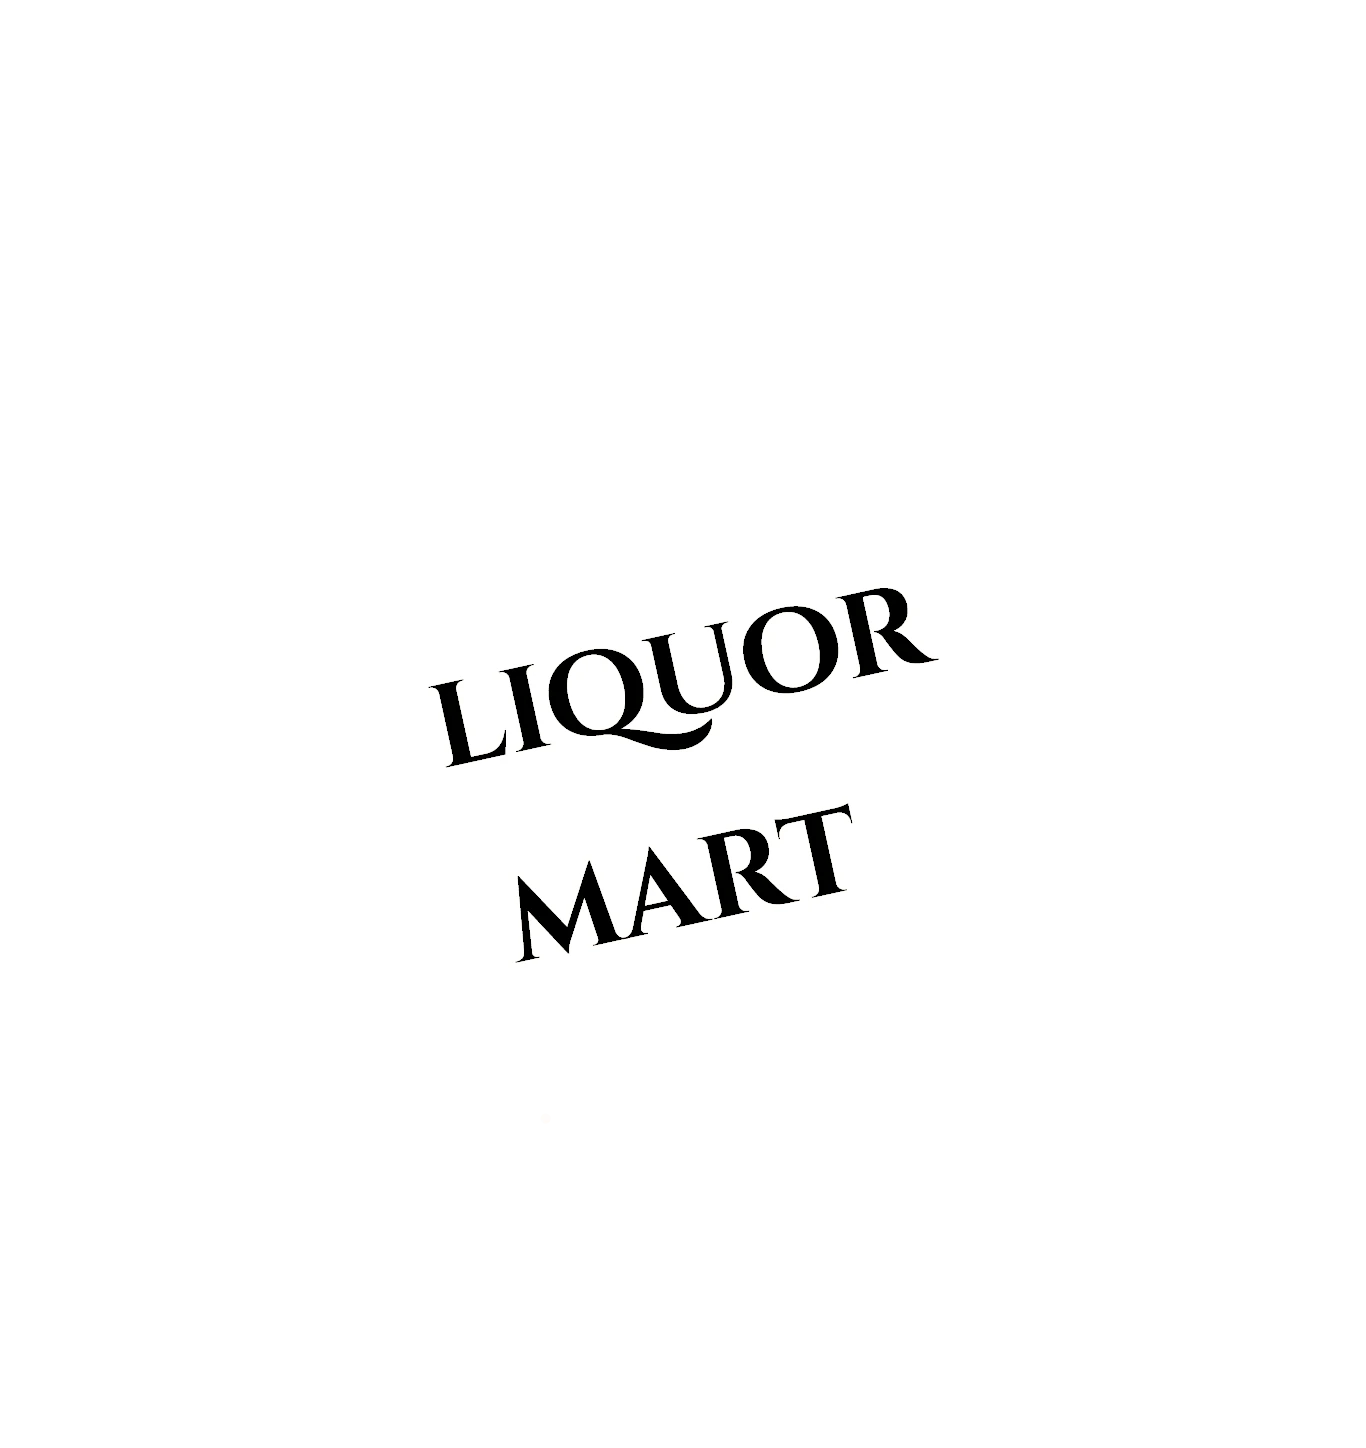 Liquor Mart logo white image